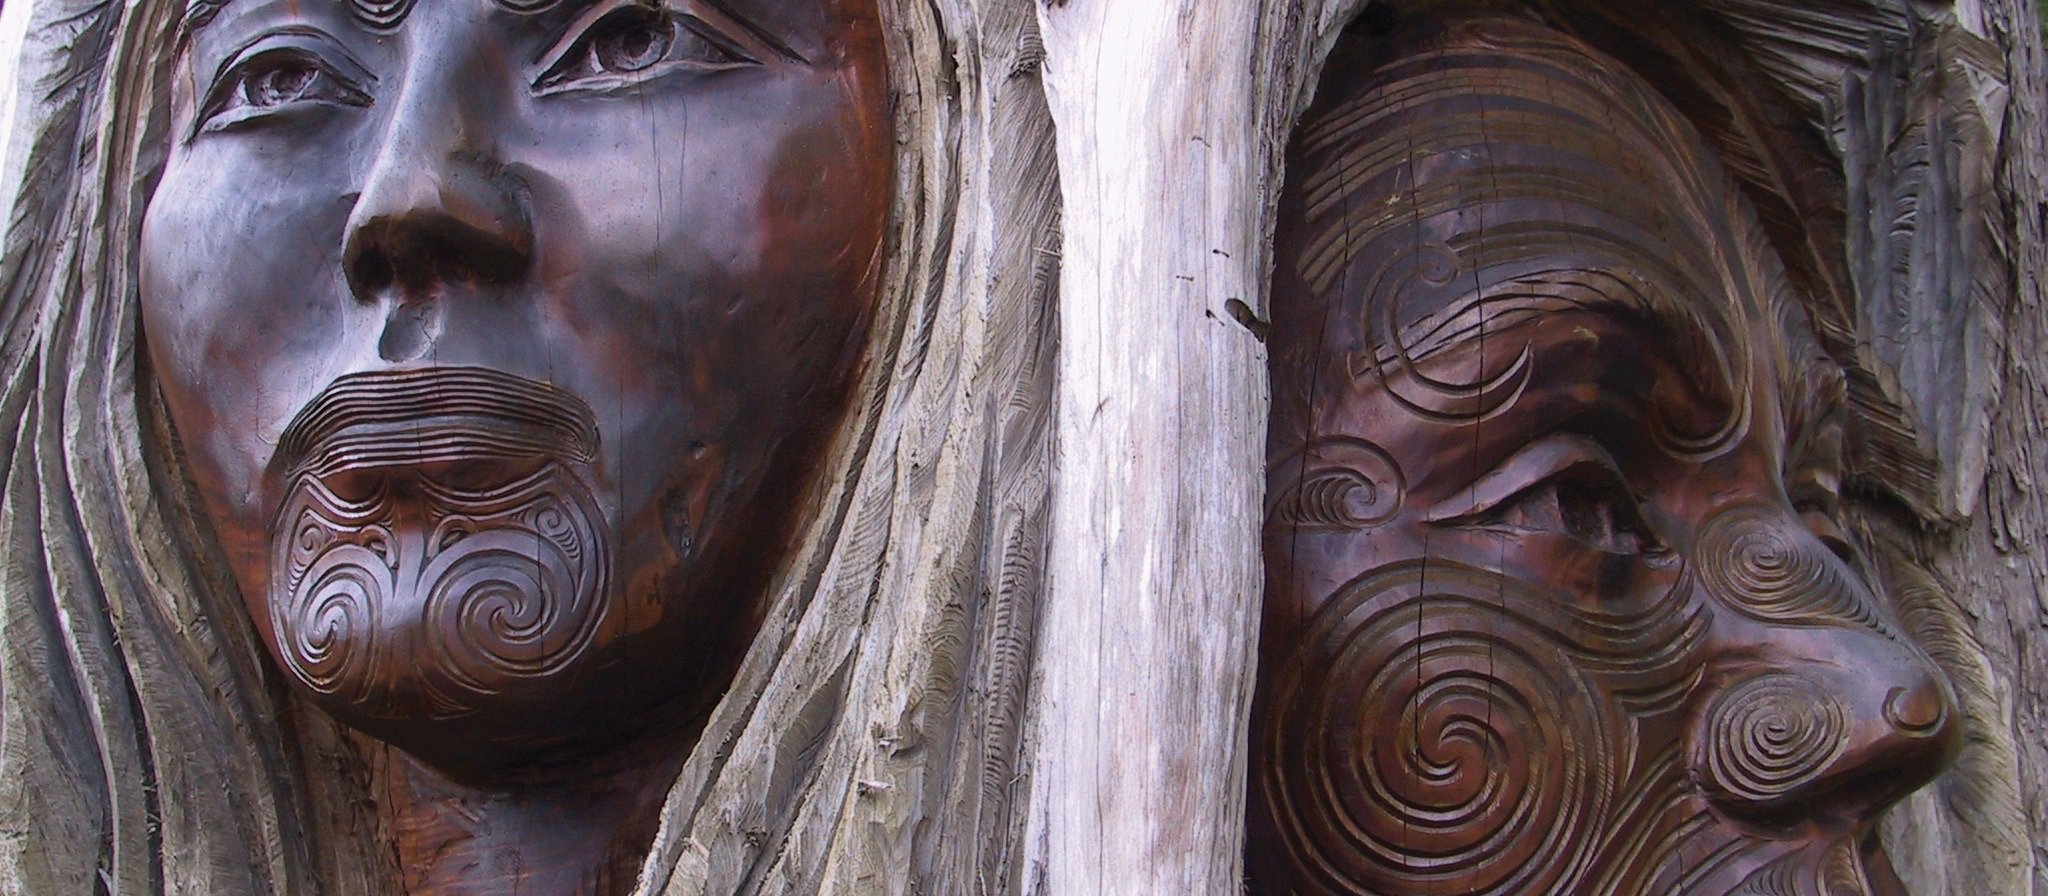 Maori Carving